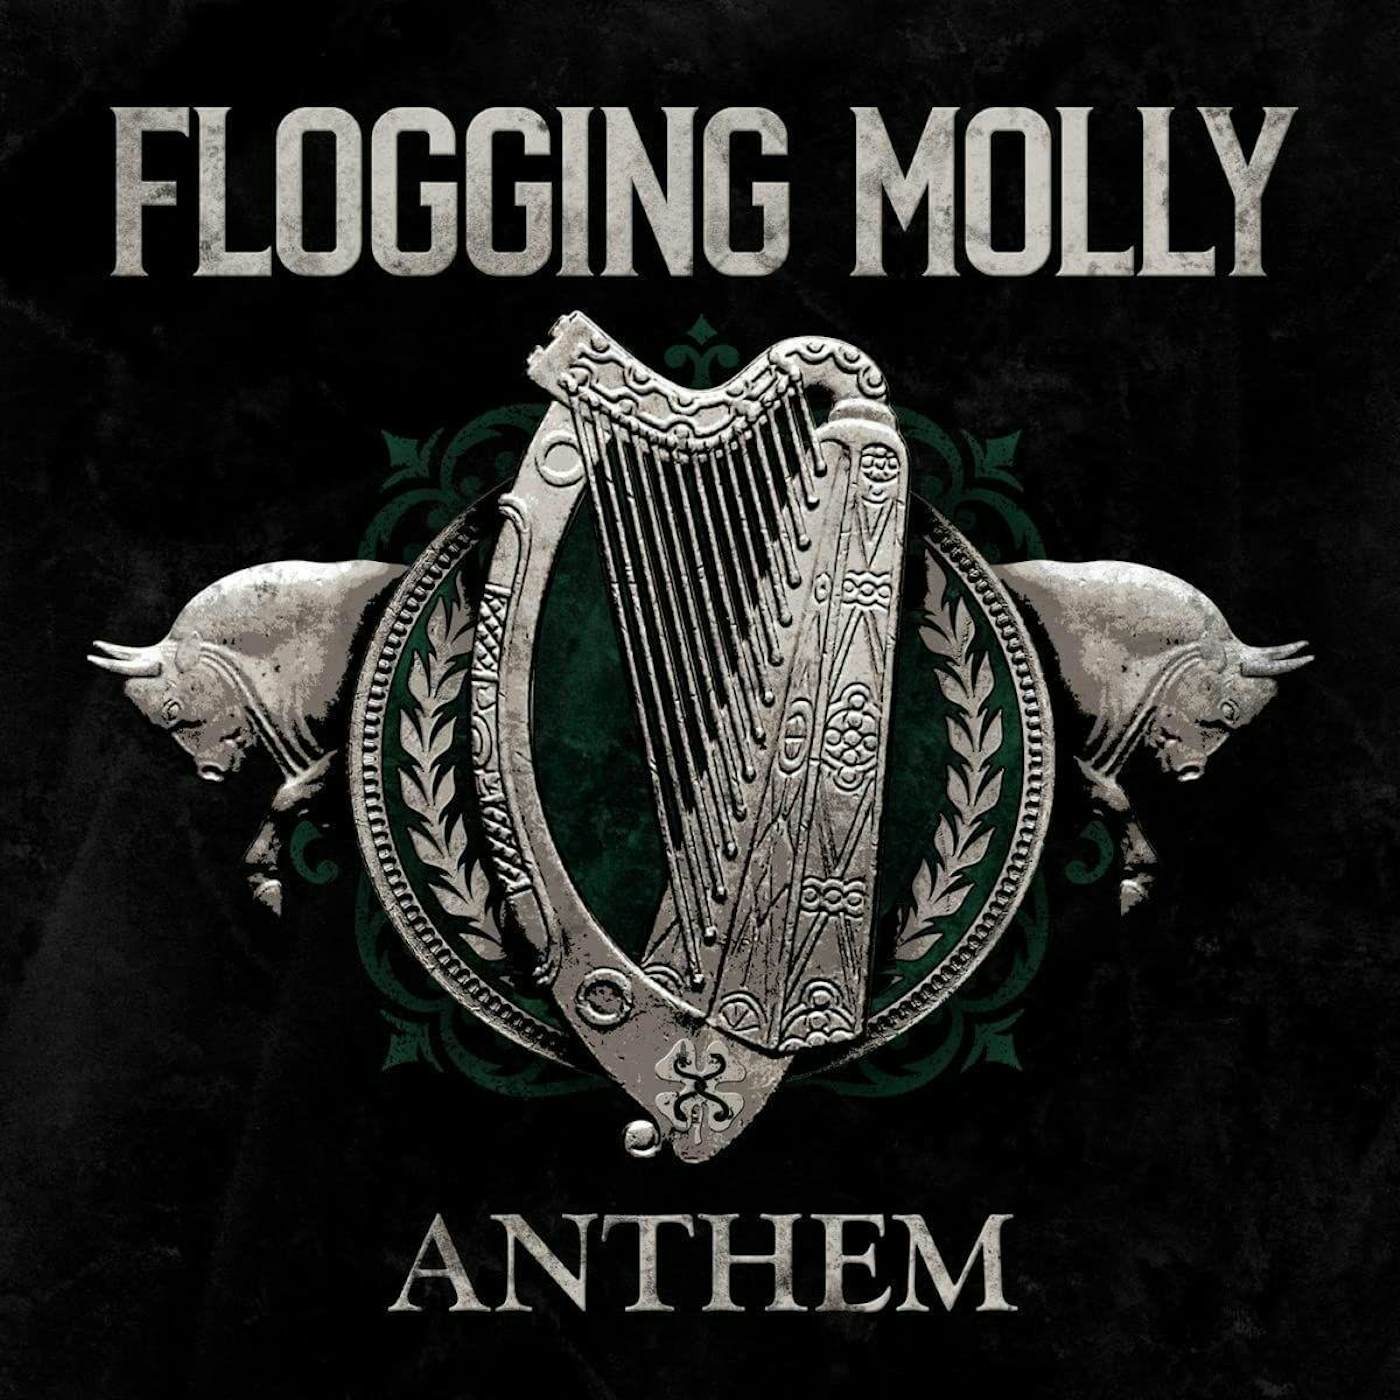 Flogging Molly Anthem (Green Galaxy Vinyl) Vinyl Record